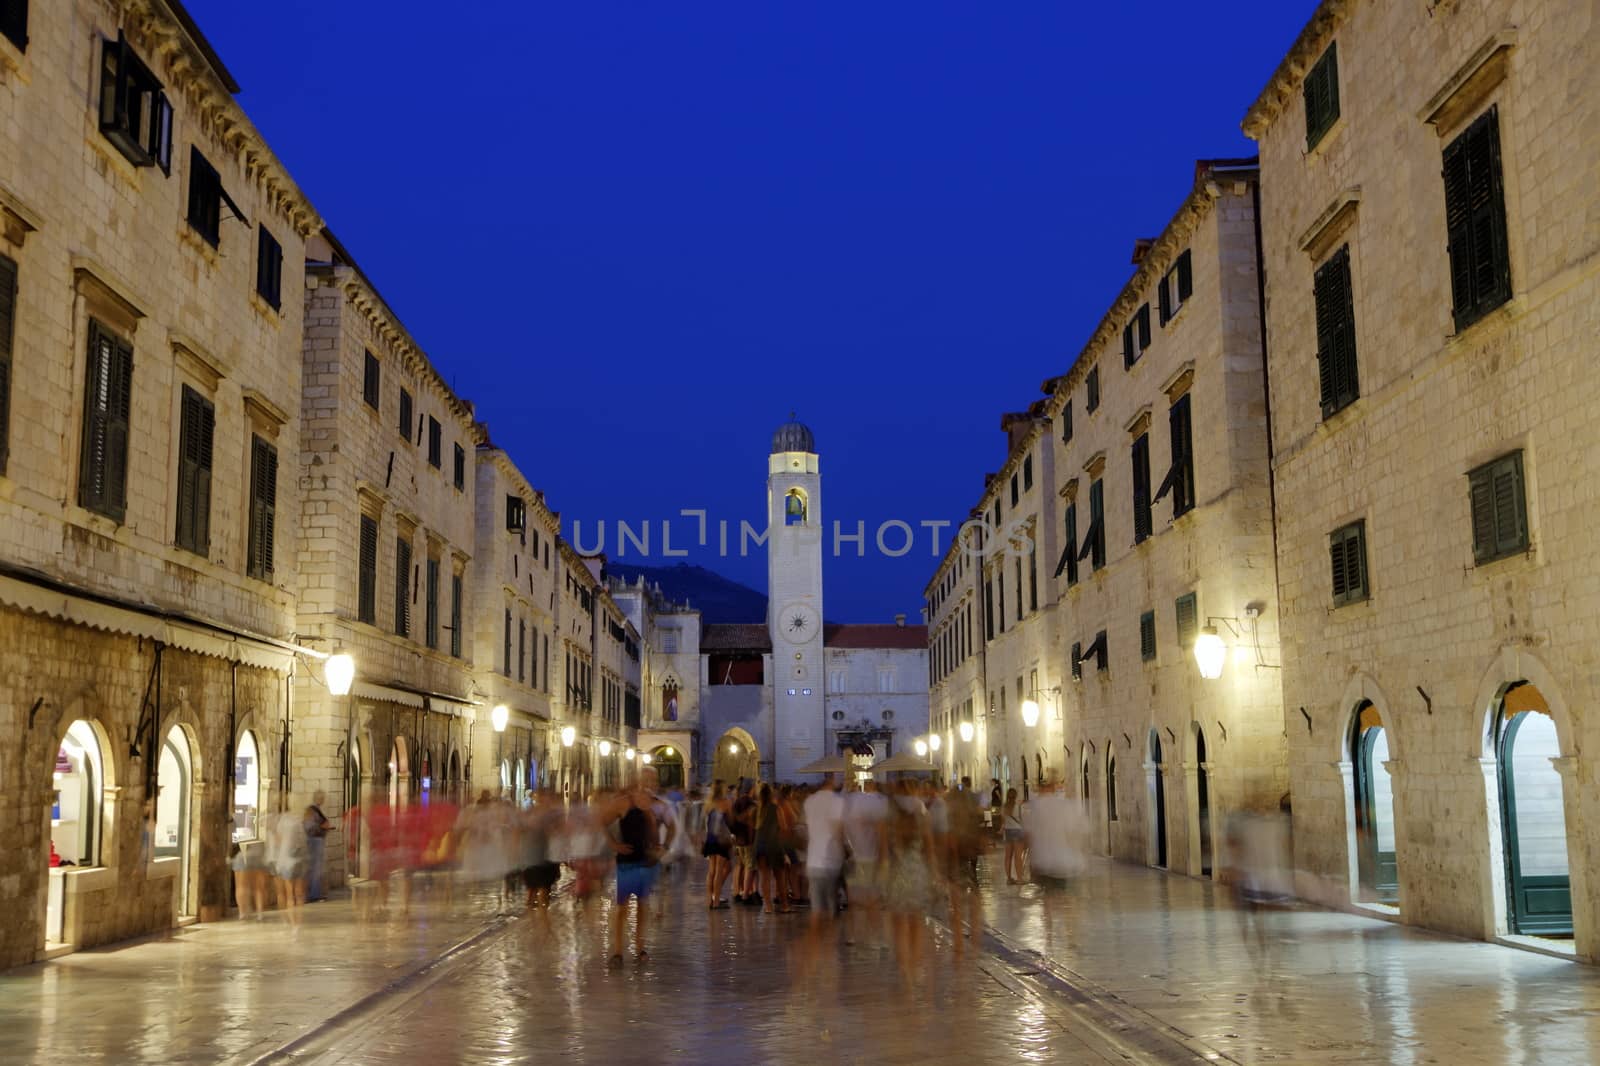 Dubrovnik stradun or placa main street, South Dalmatia region, Croatia, hdr by Elenaphotos21